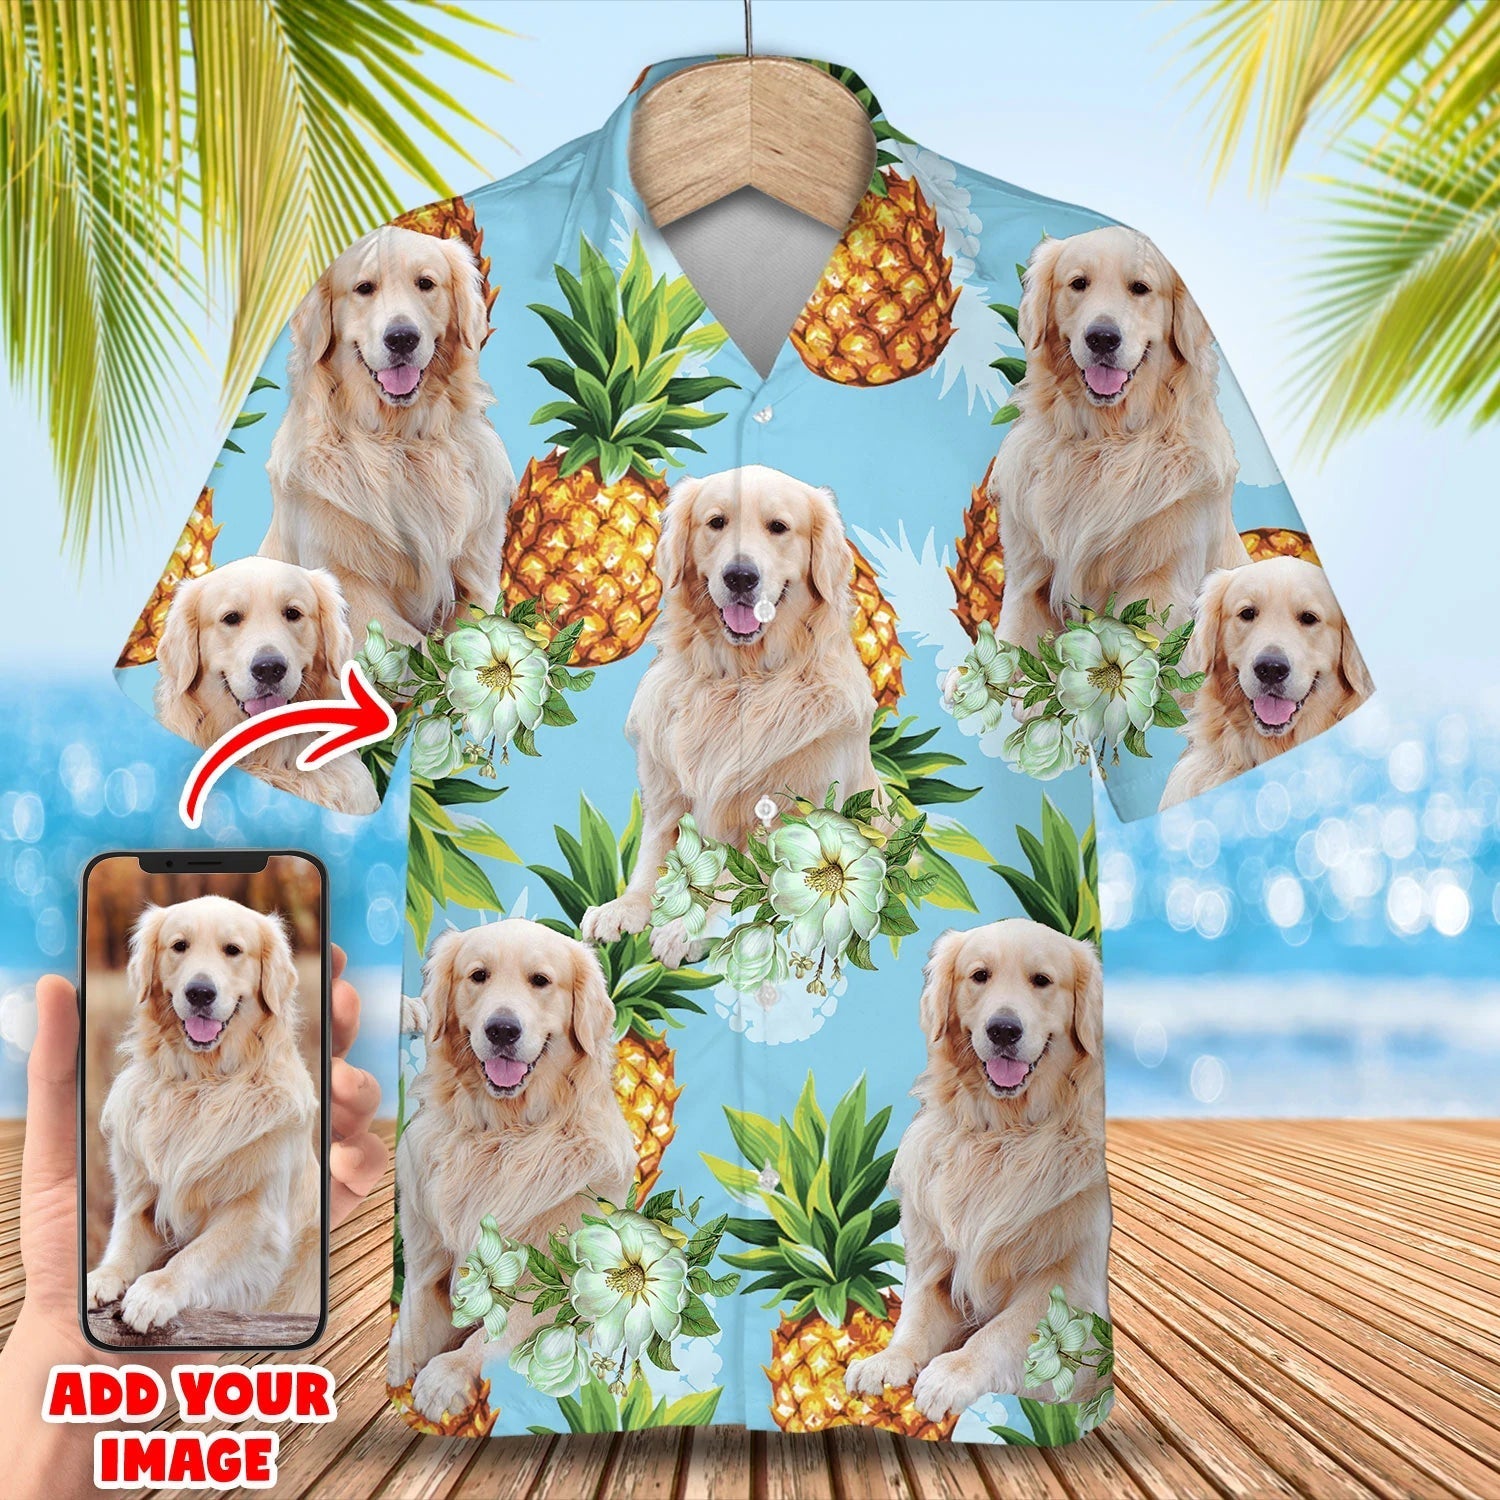 Custom Image Dog Hawaiian shirt/ Summer Dog Hawaiian shirt For Men/ Women